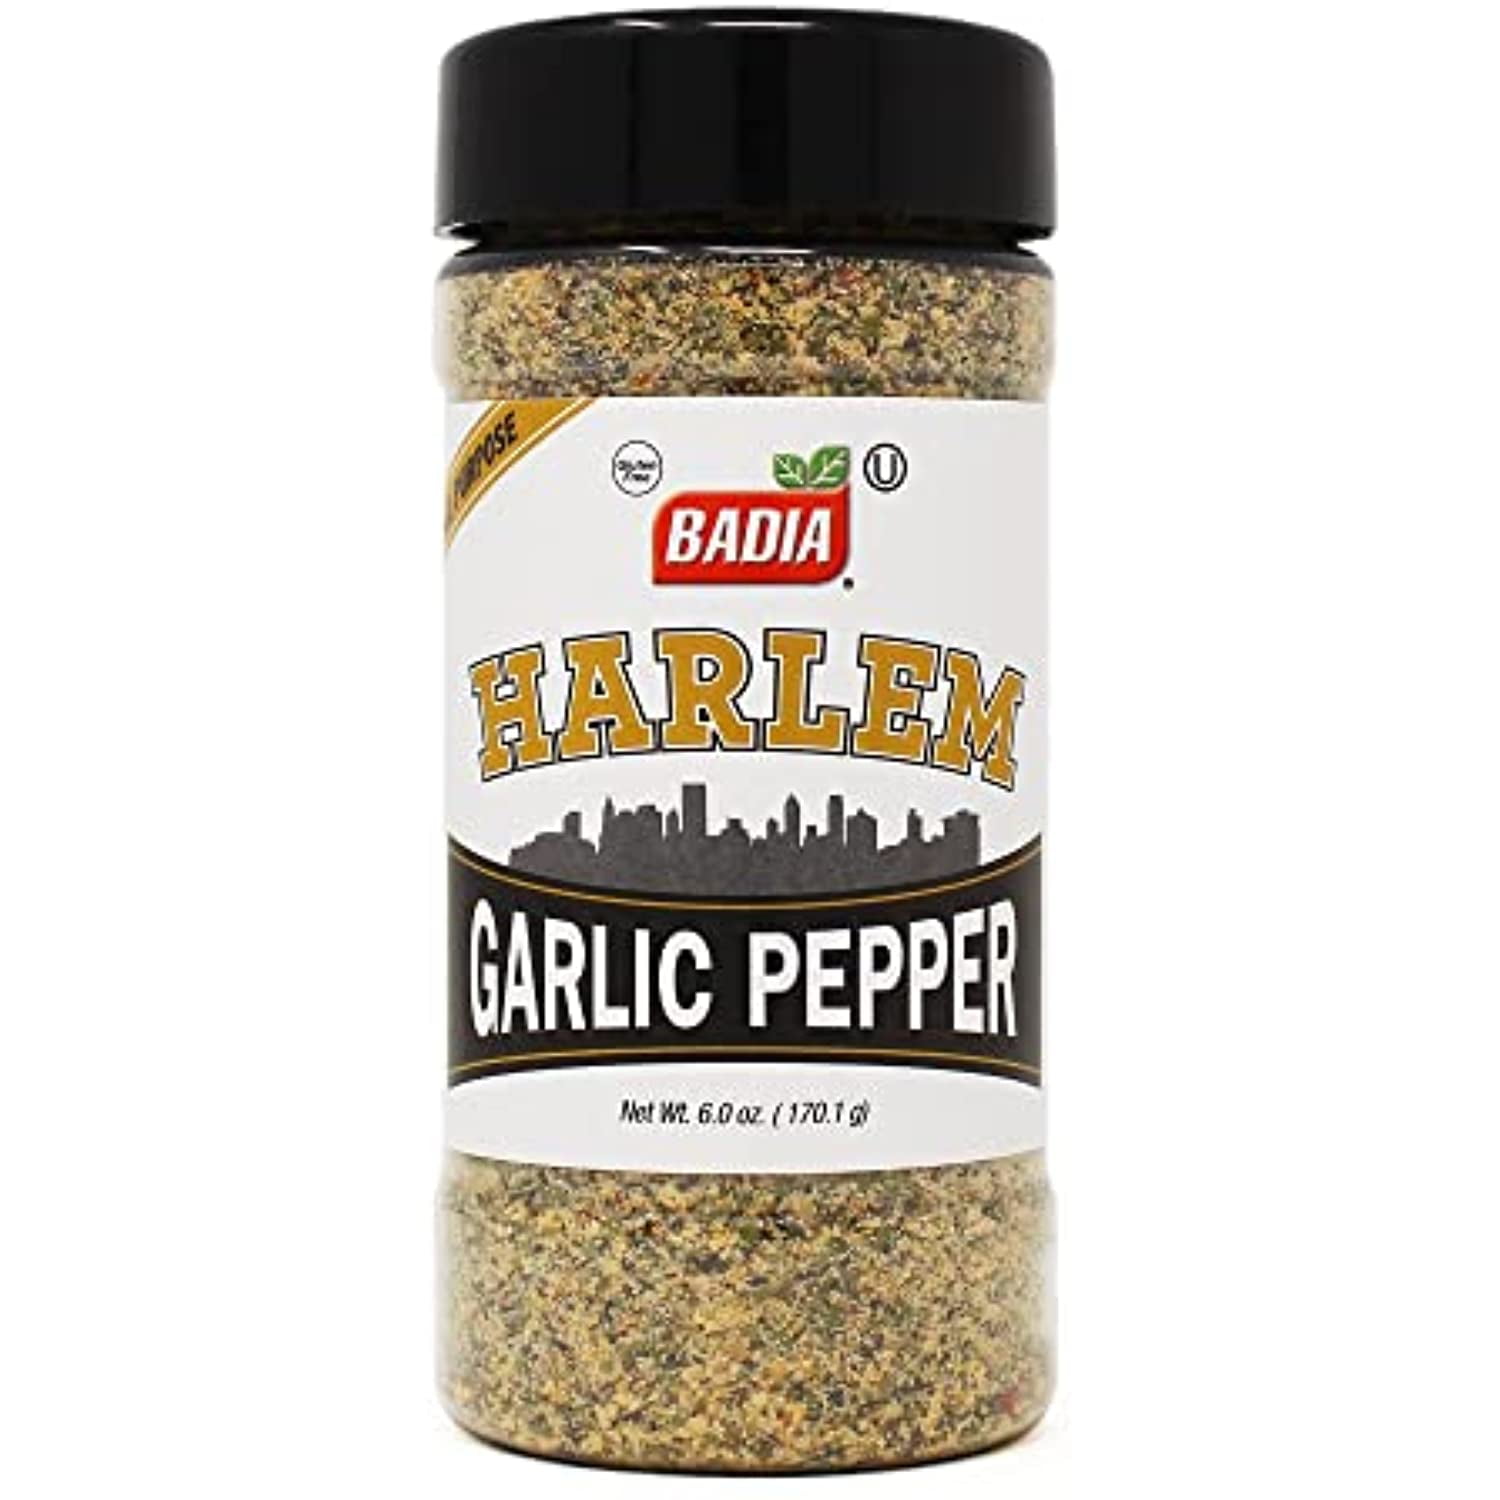 Brand - Happy Belly Garlic Pepper (Black Pepper, Garlic), 4 Oz